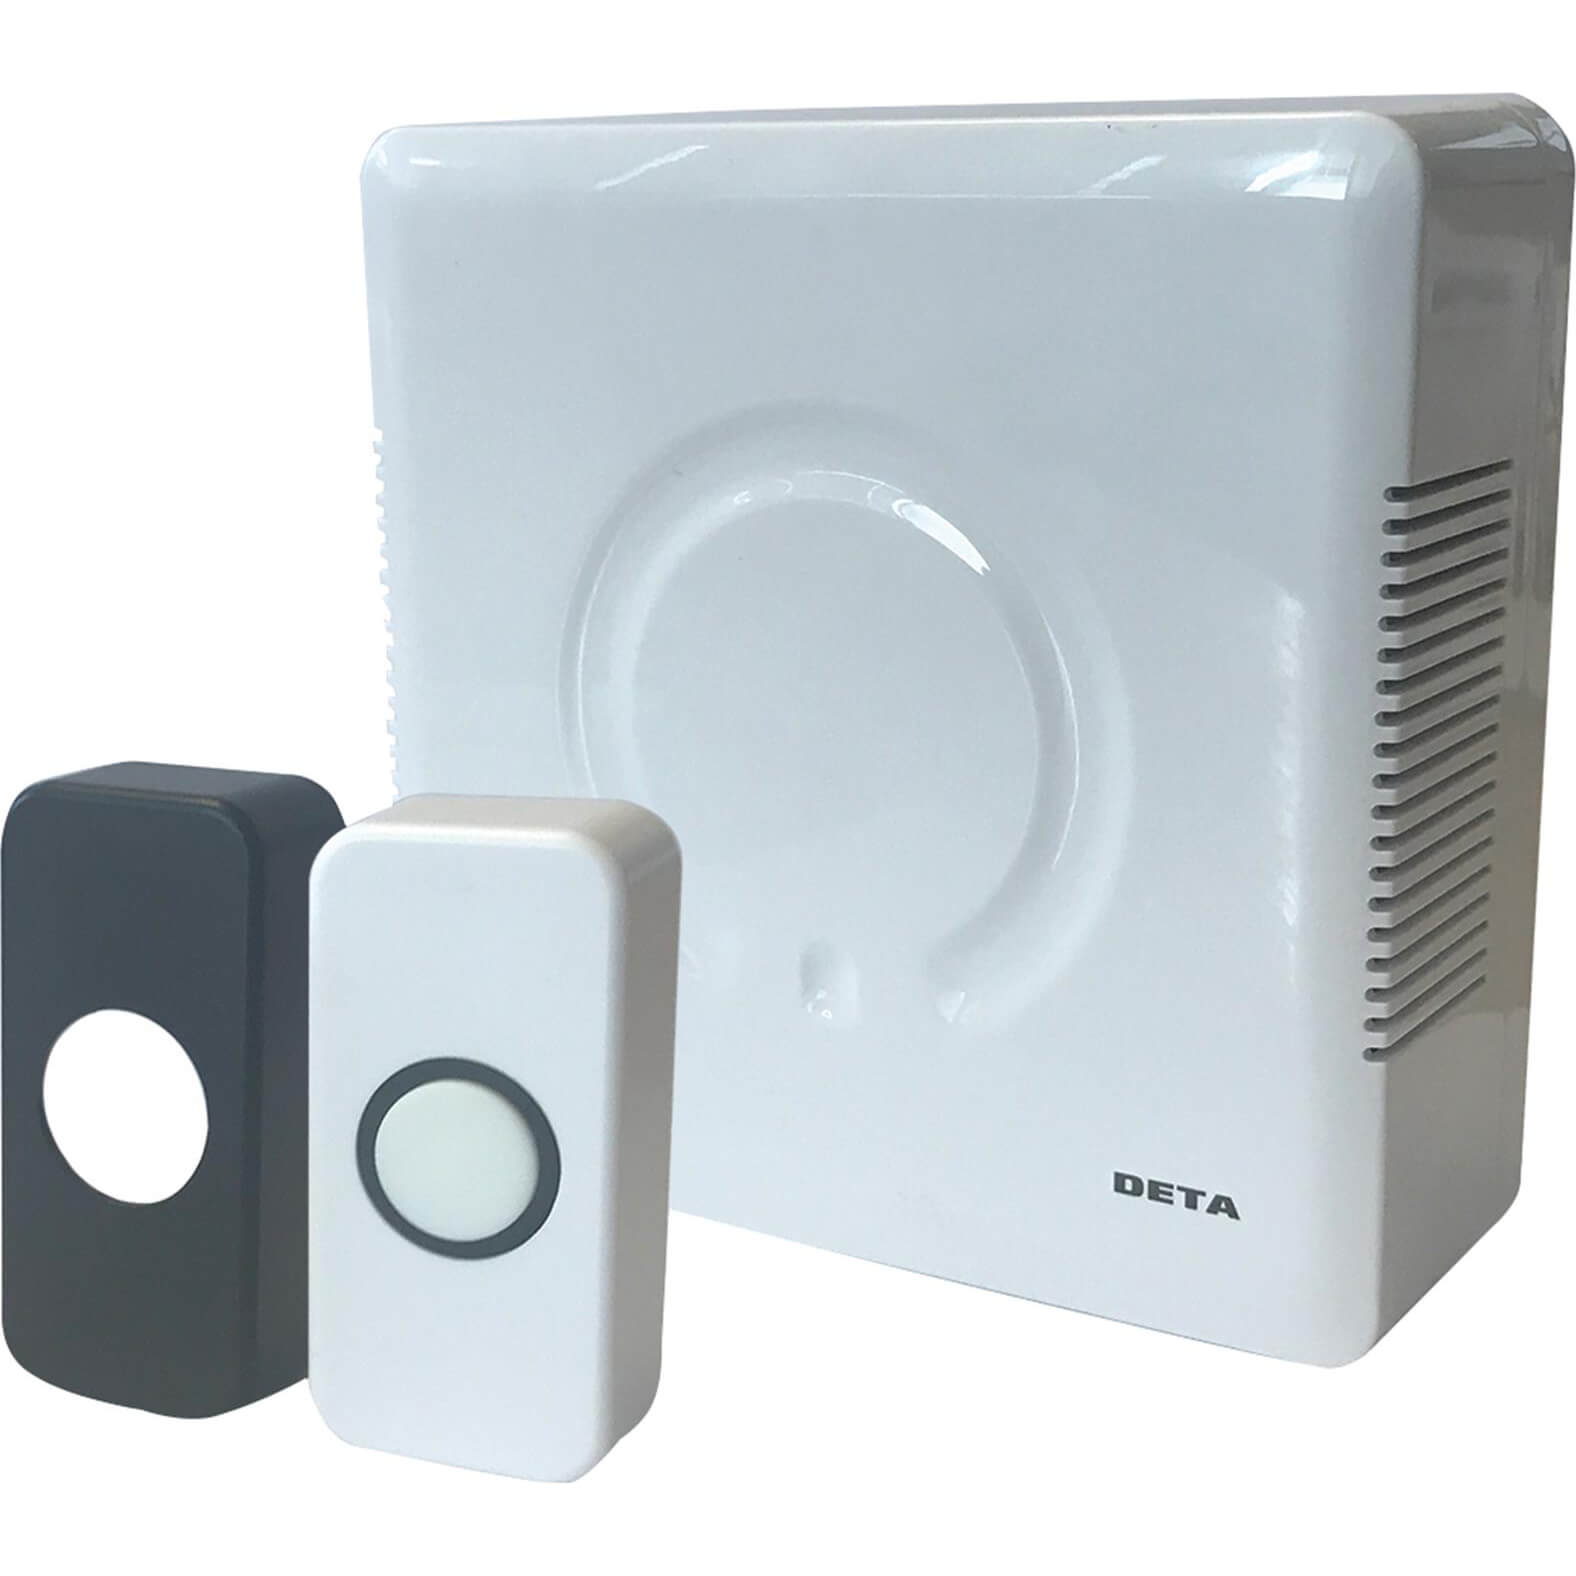 Photos - Doorbell Deta Vimark Wired Door Bell Chime and Push Kit C3504 